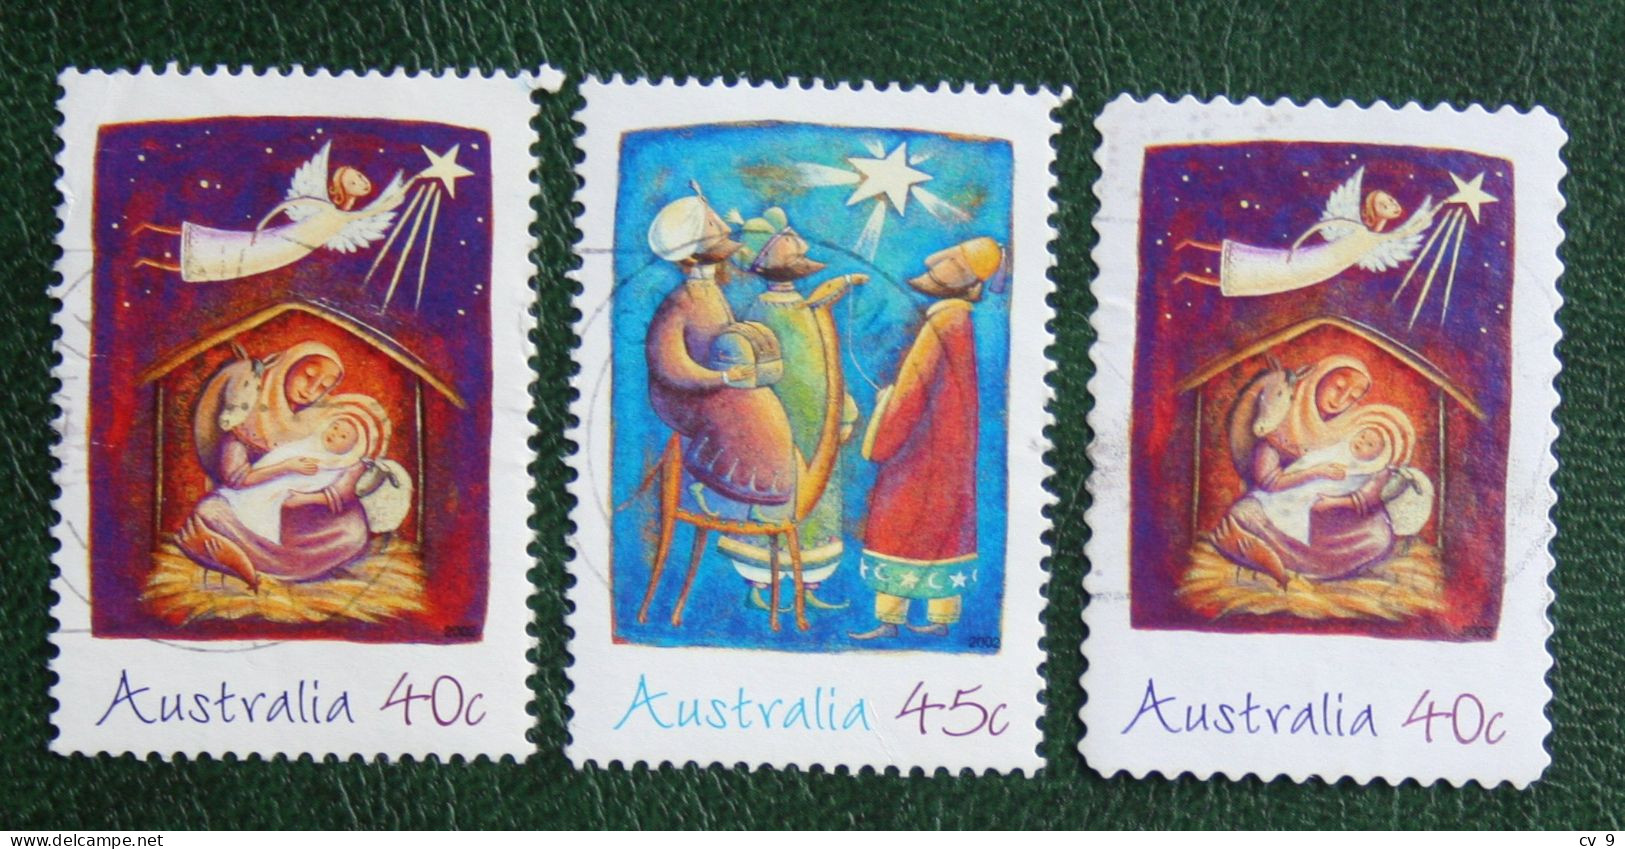 Natale Weihnachten Xmas Noel Kerst 2002 (Mi 2186-2187 2188) Used Gebruikt Oblitere Australia Australien Australie - Gebraucht